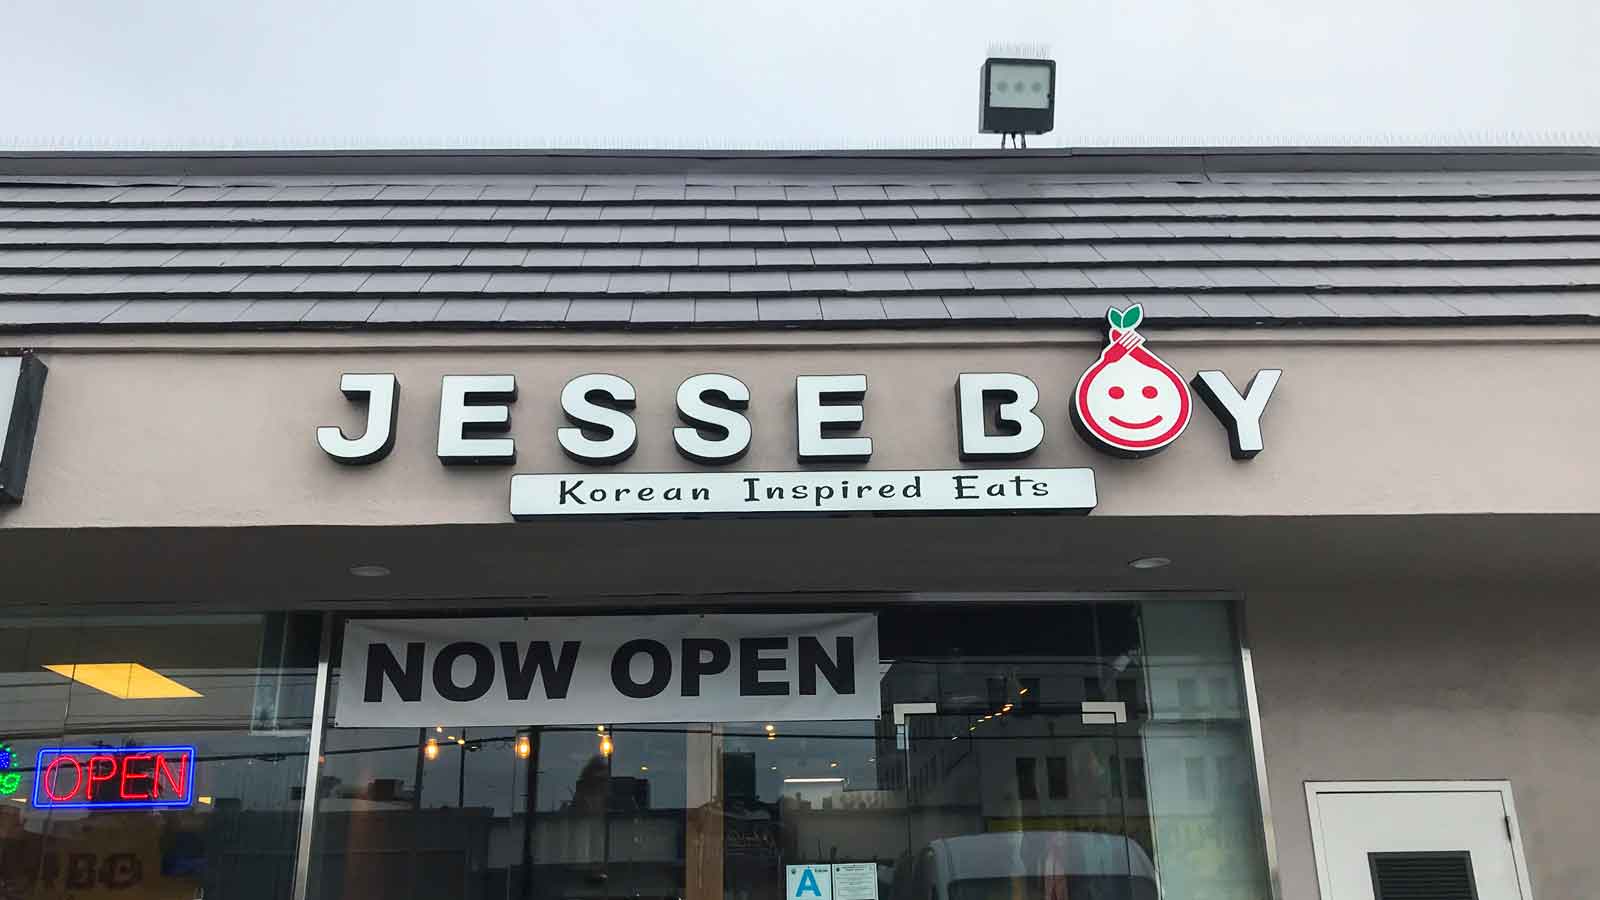 jesse boy acrylic aluminum restaurant sign